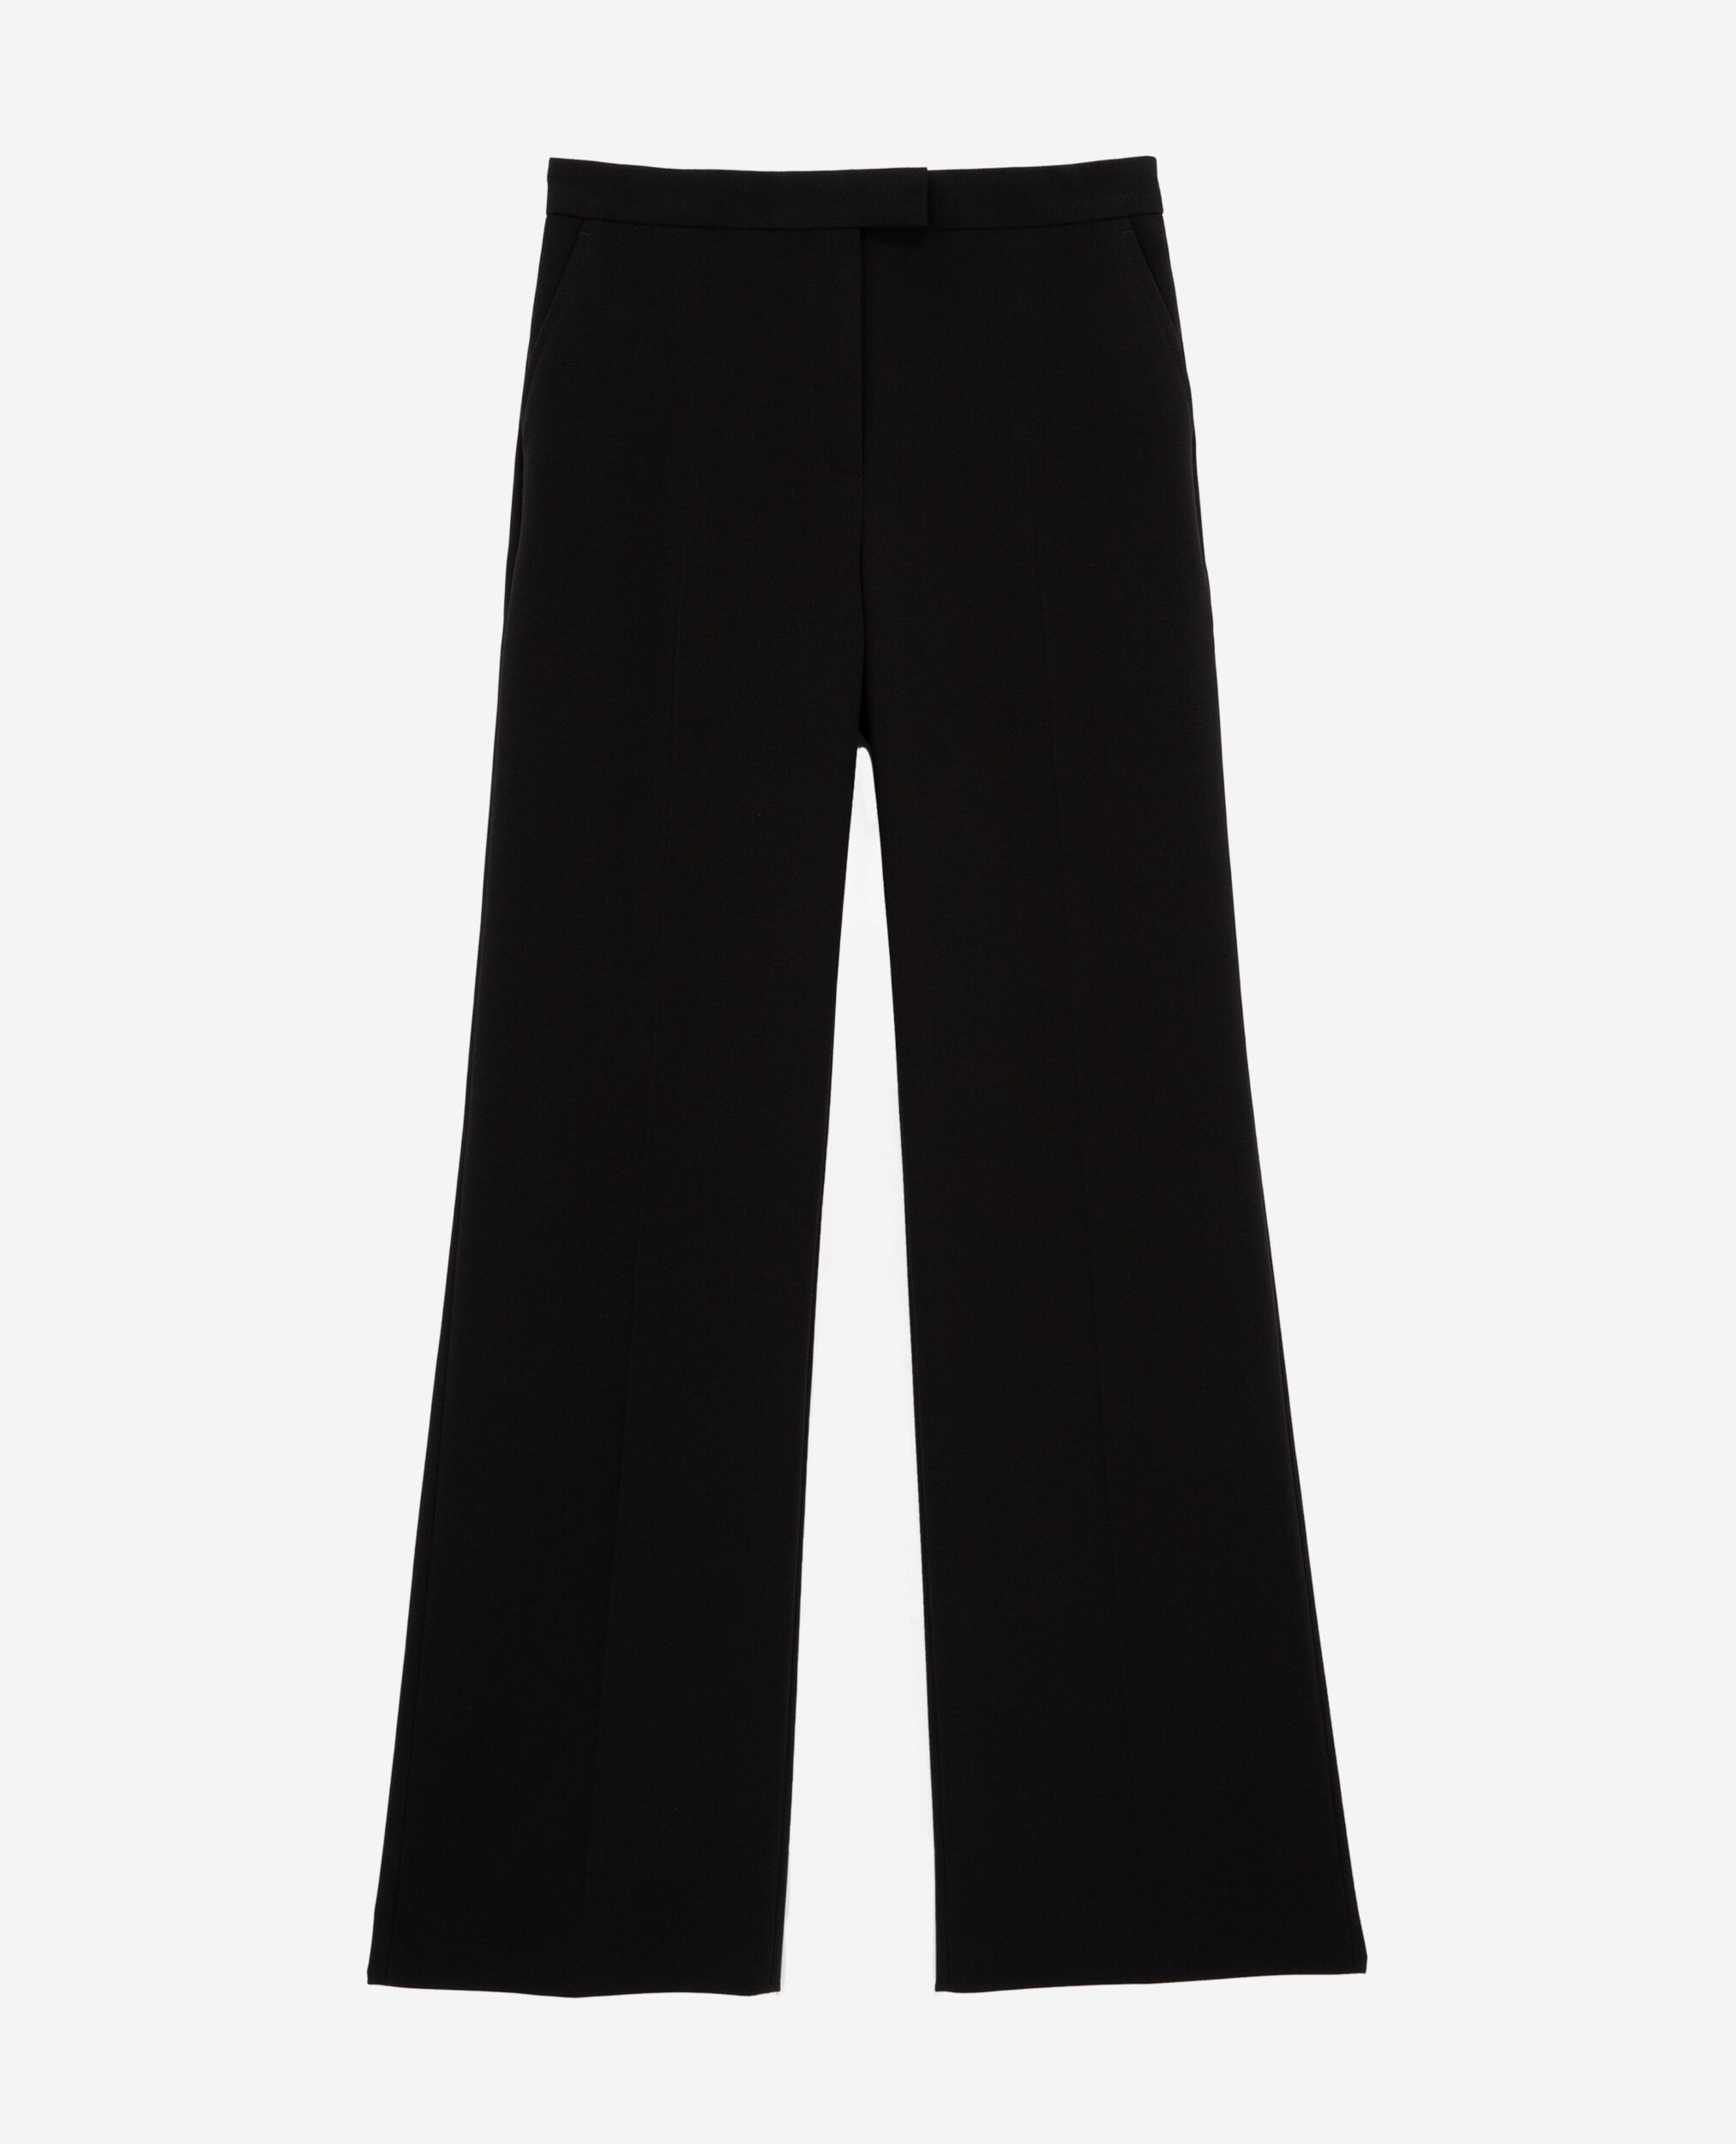 Pantalones traje negros crepé, BLACK, hi-res image number null